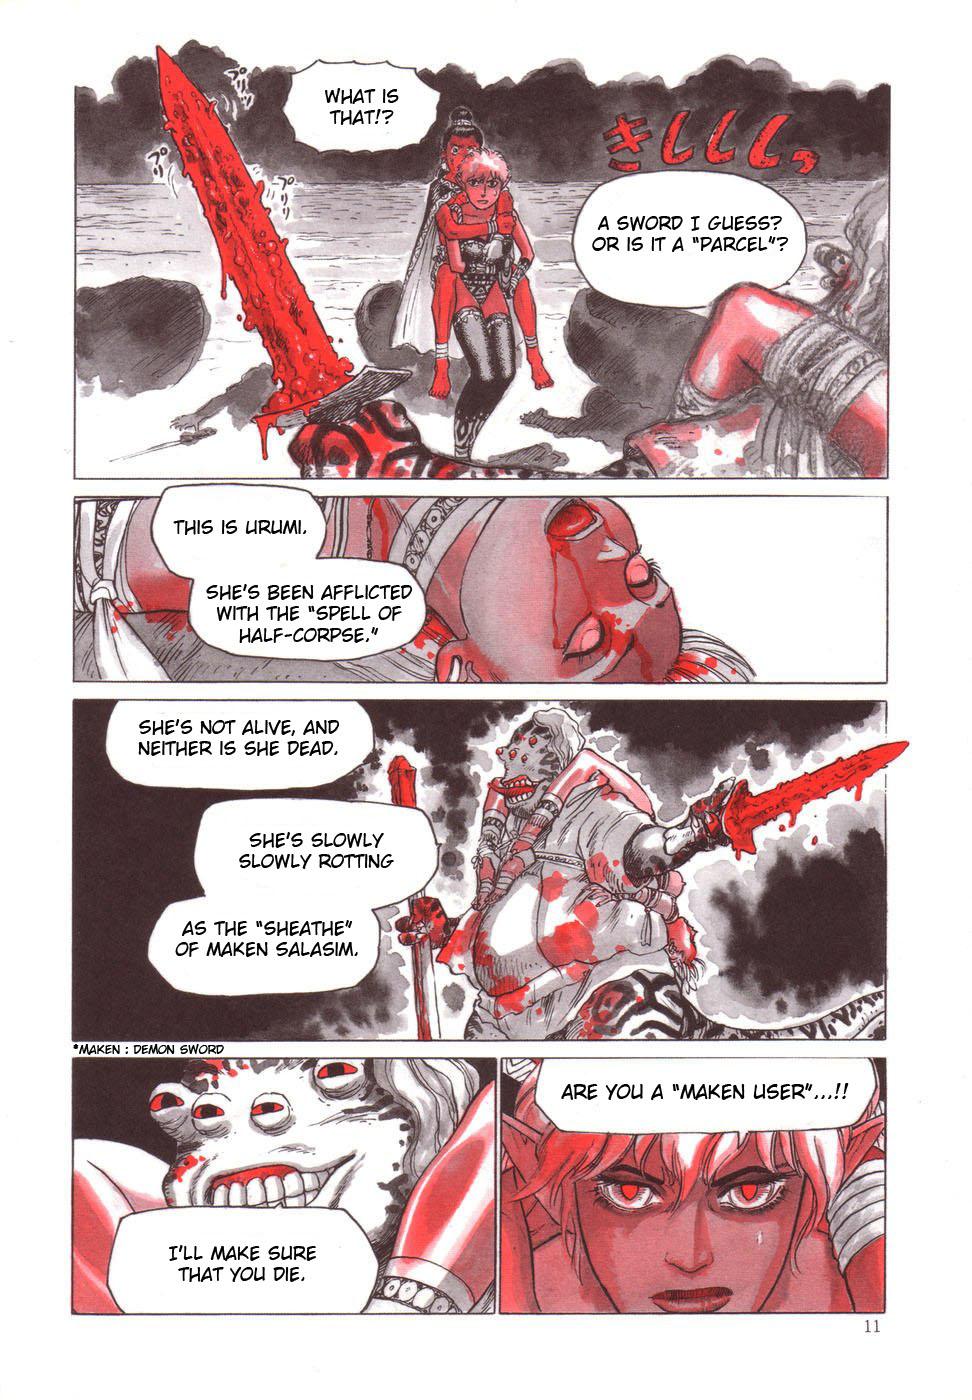 Mms Rotten Sword Romance - Page 11